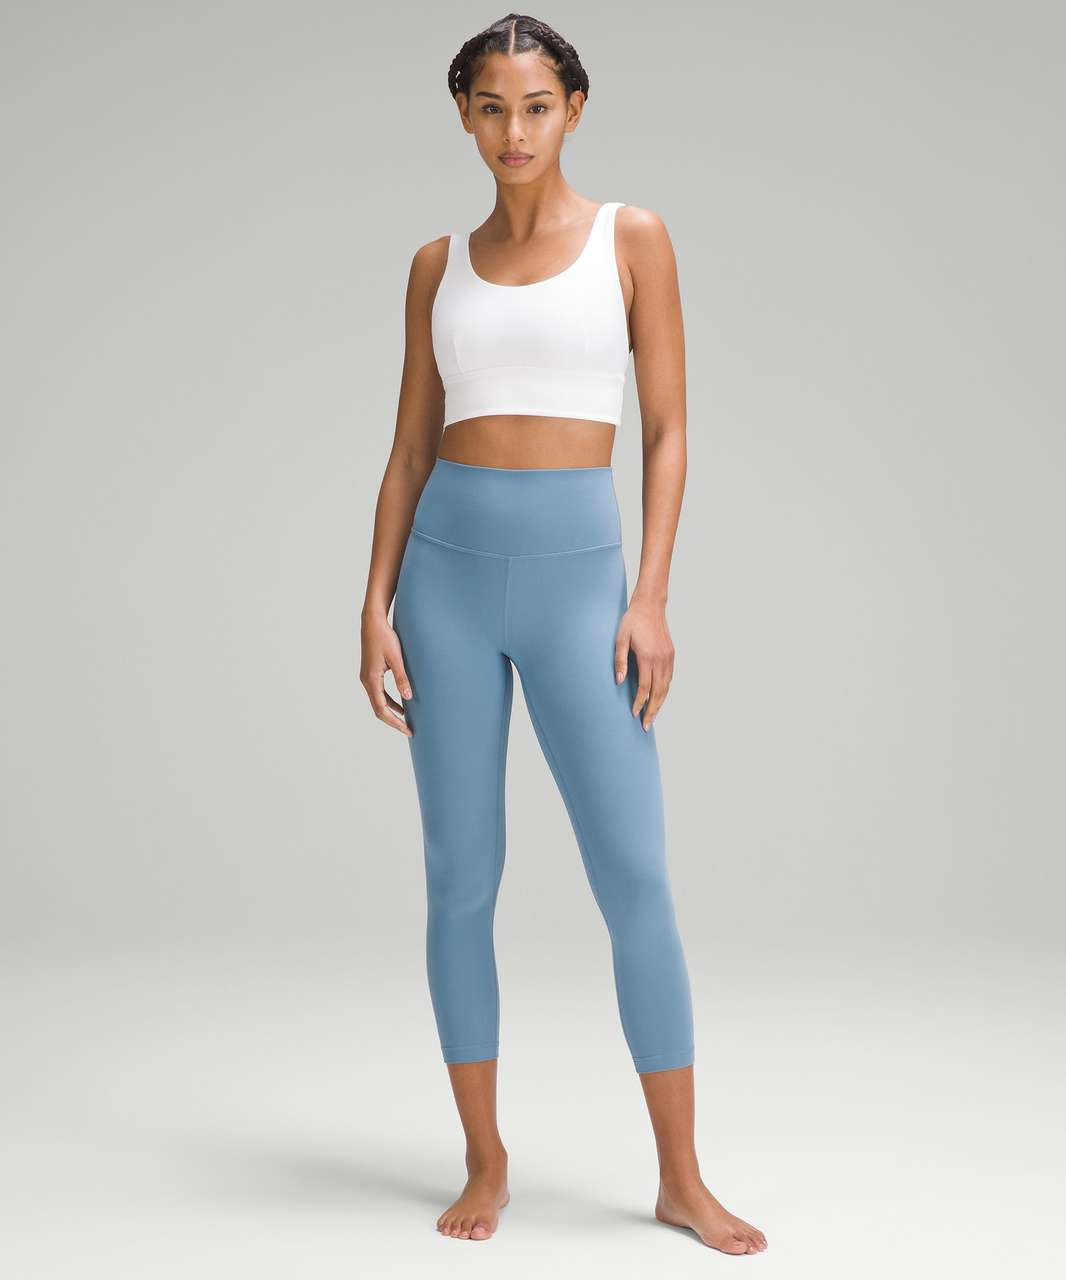 Lululemon Light Blue Align Leggings Size 2 - $65 (33% Off Retail) - From  Lily